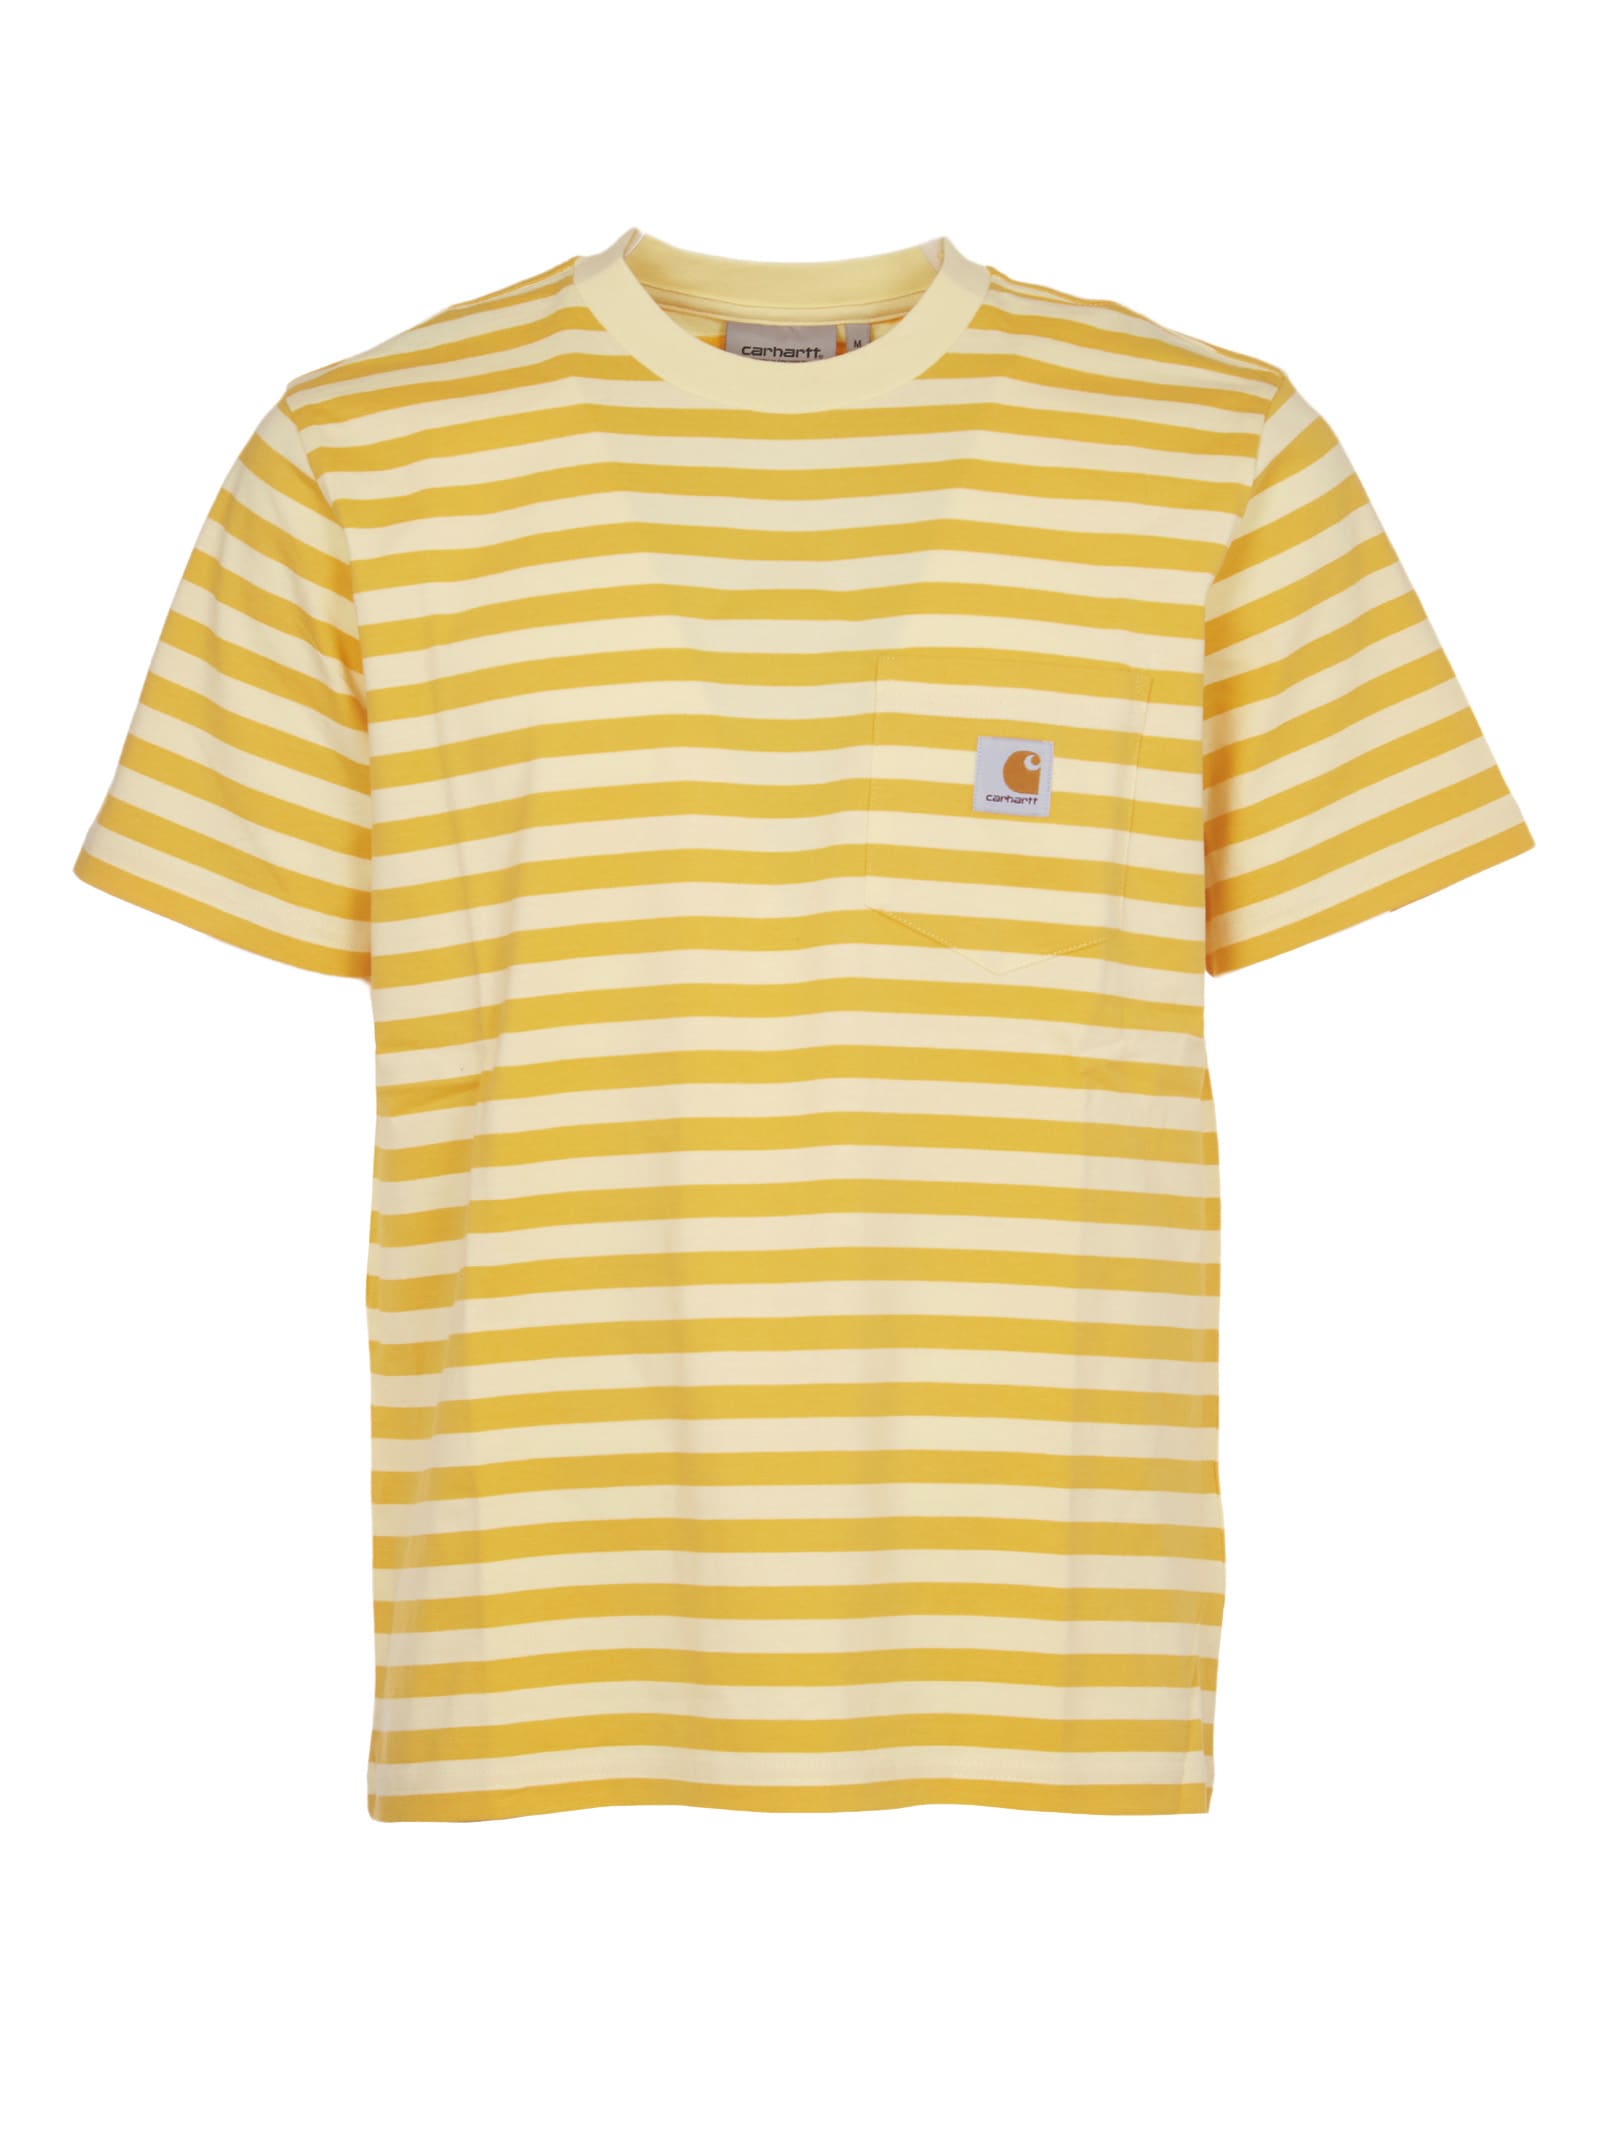 Carhartt Yellow Striped T-shirt